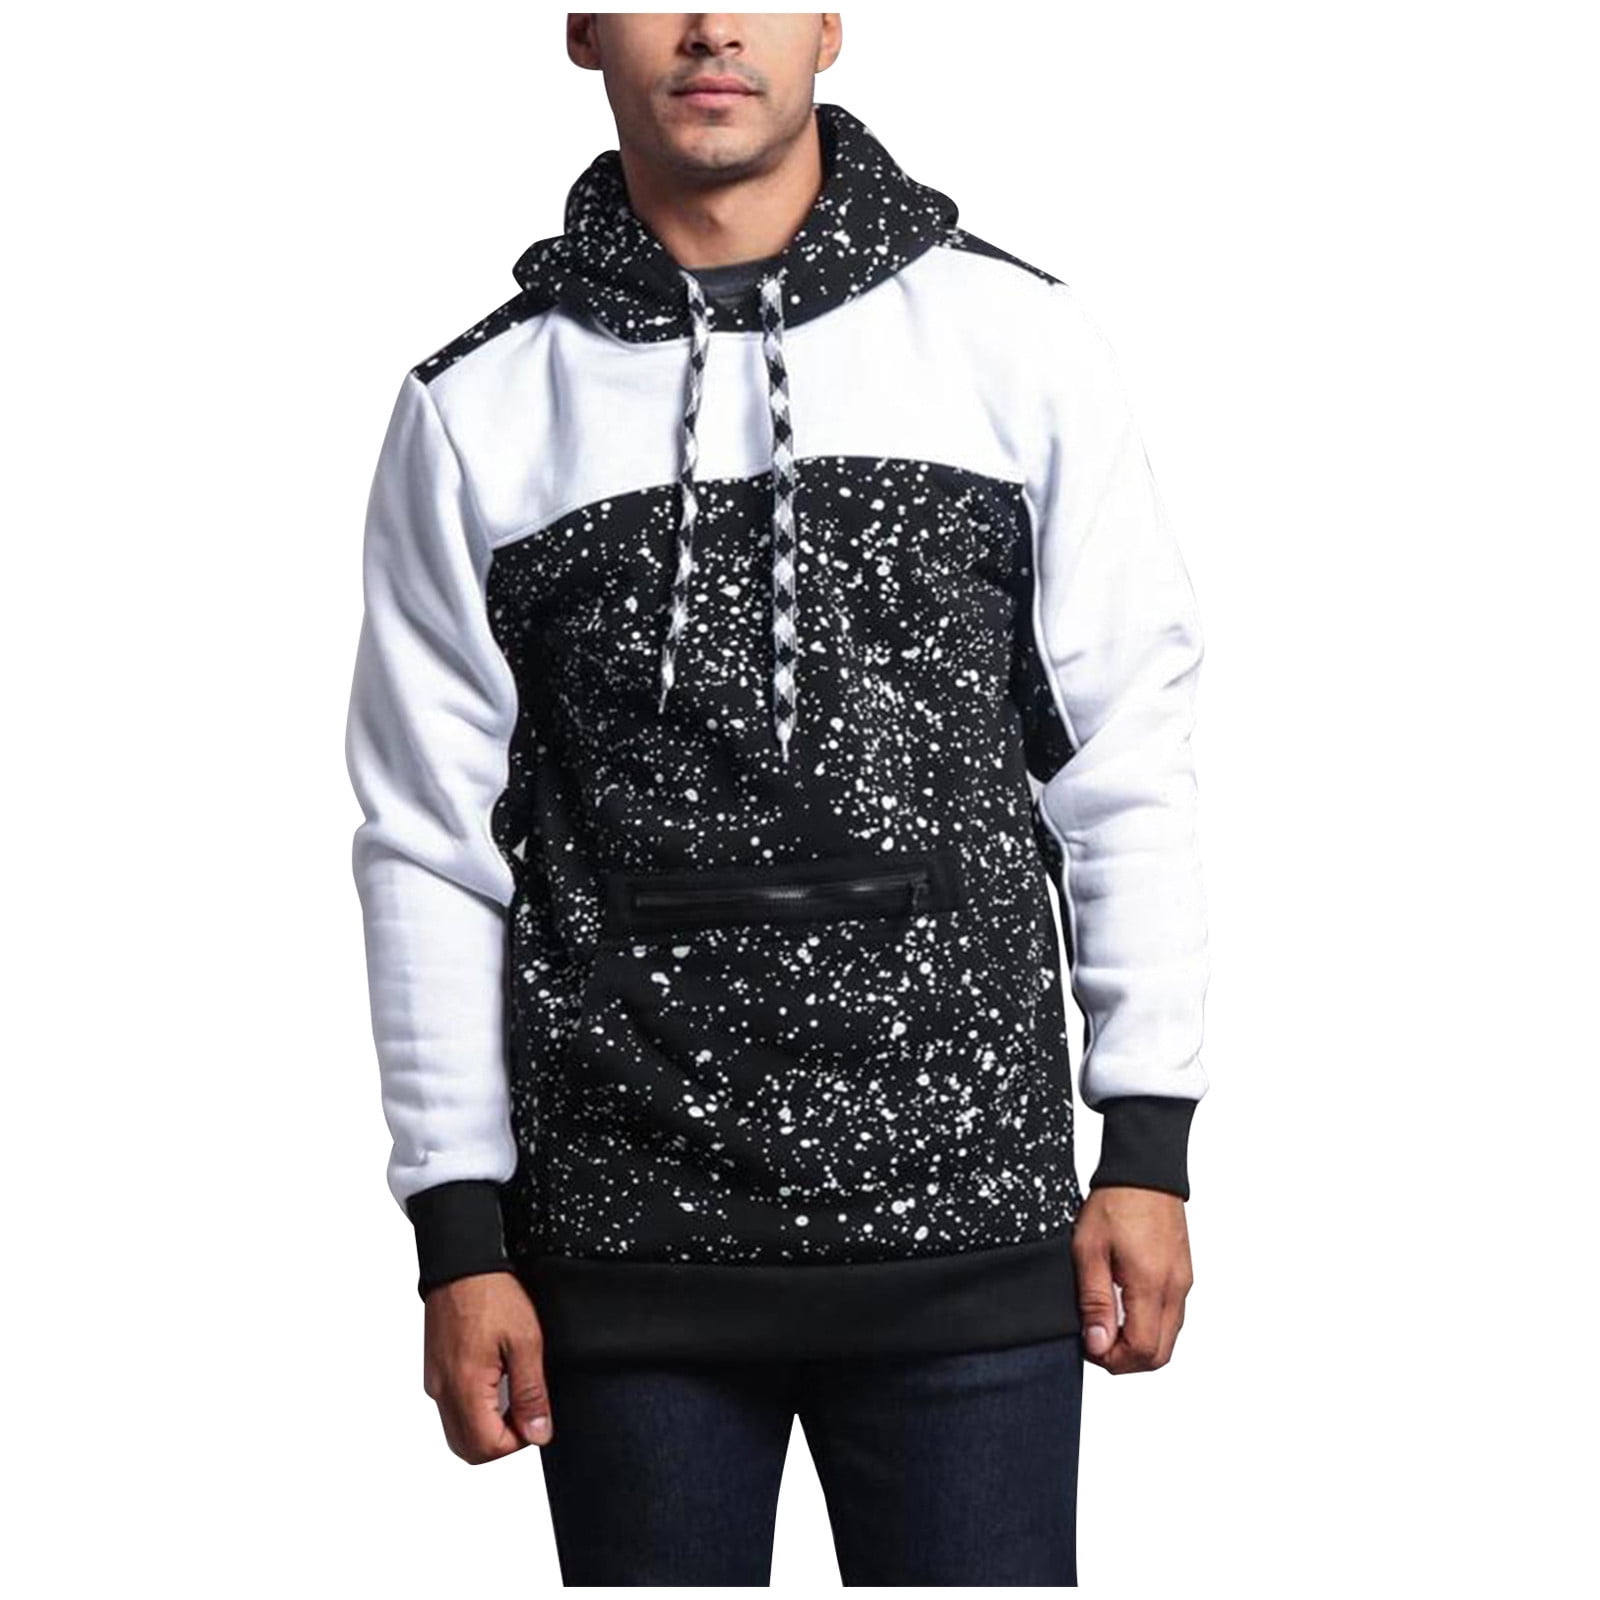 Men's Coat and Winter Zipper / Button Hooded Outwear Deals Jacket Sweatshirt Tops Blouse Black S-10XL - Walmart.com